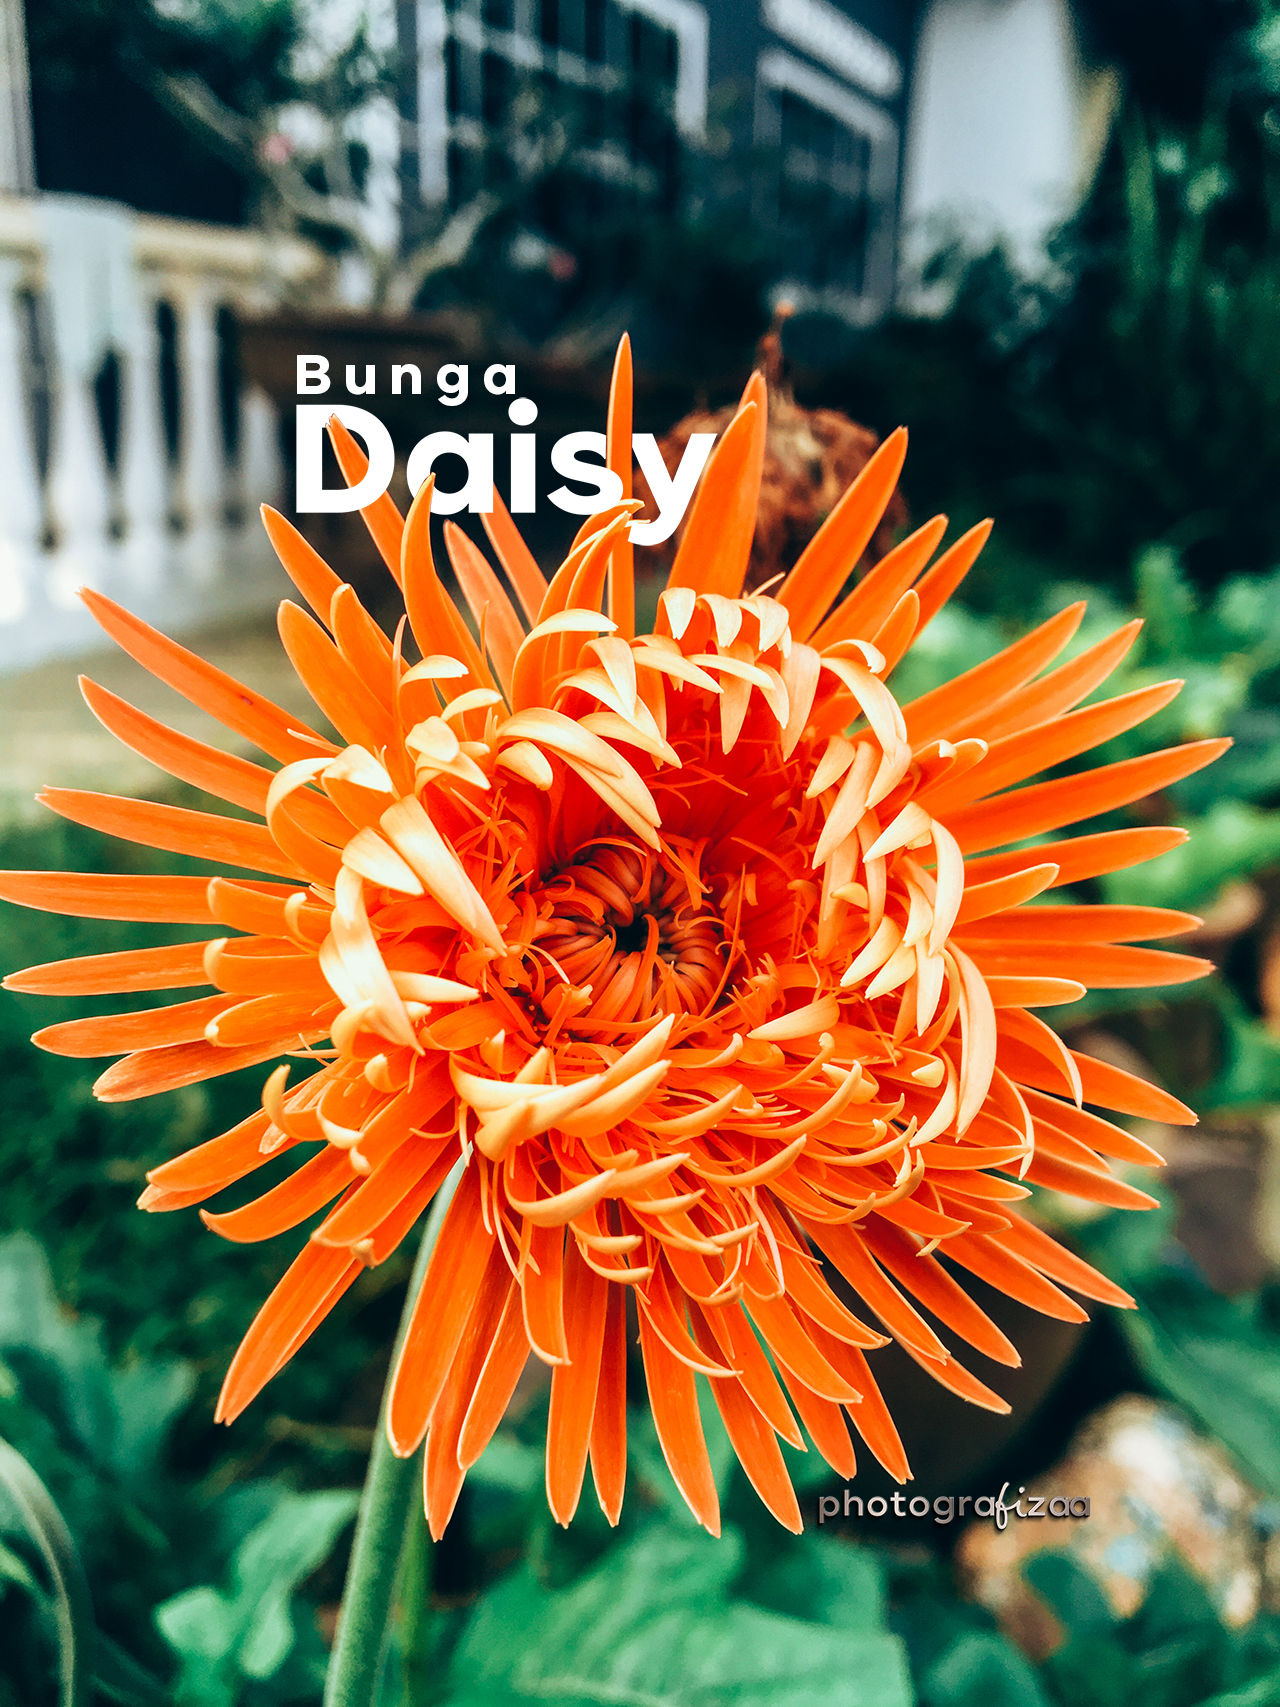 Bunga Daisy Orange